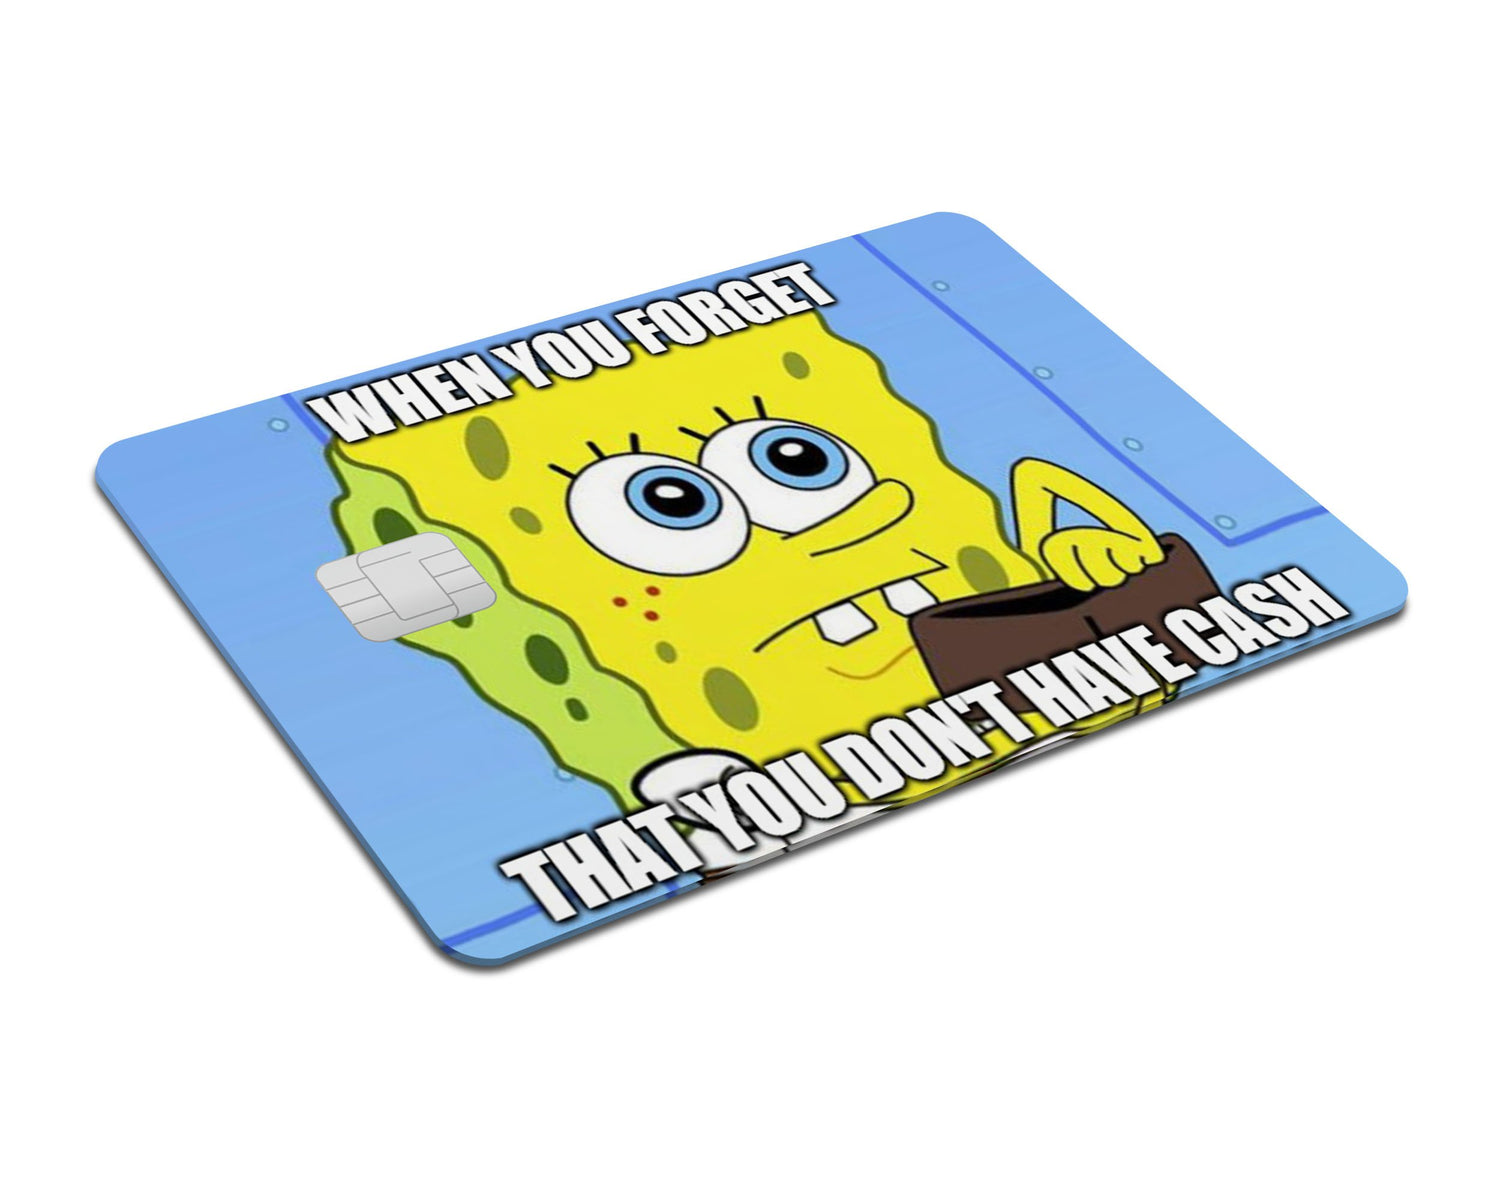 Flex Designs Credit Card Spongebob Wallet Full Skins - Meme Quotes & Debit Card Skin